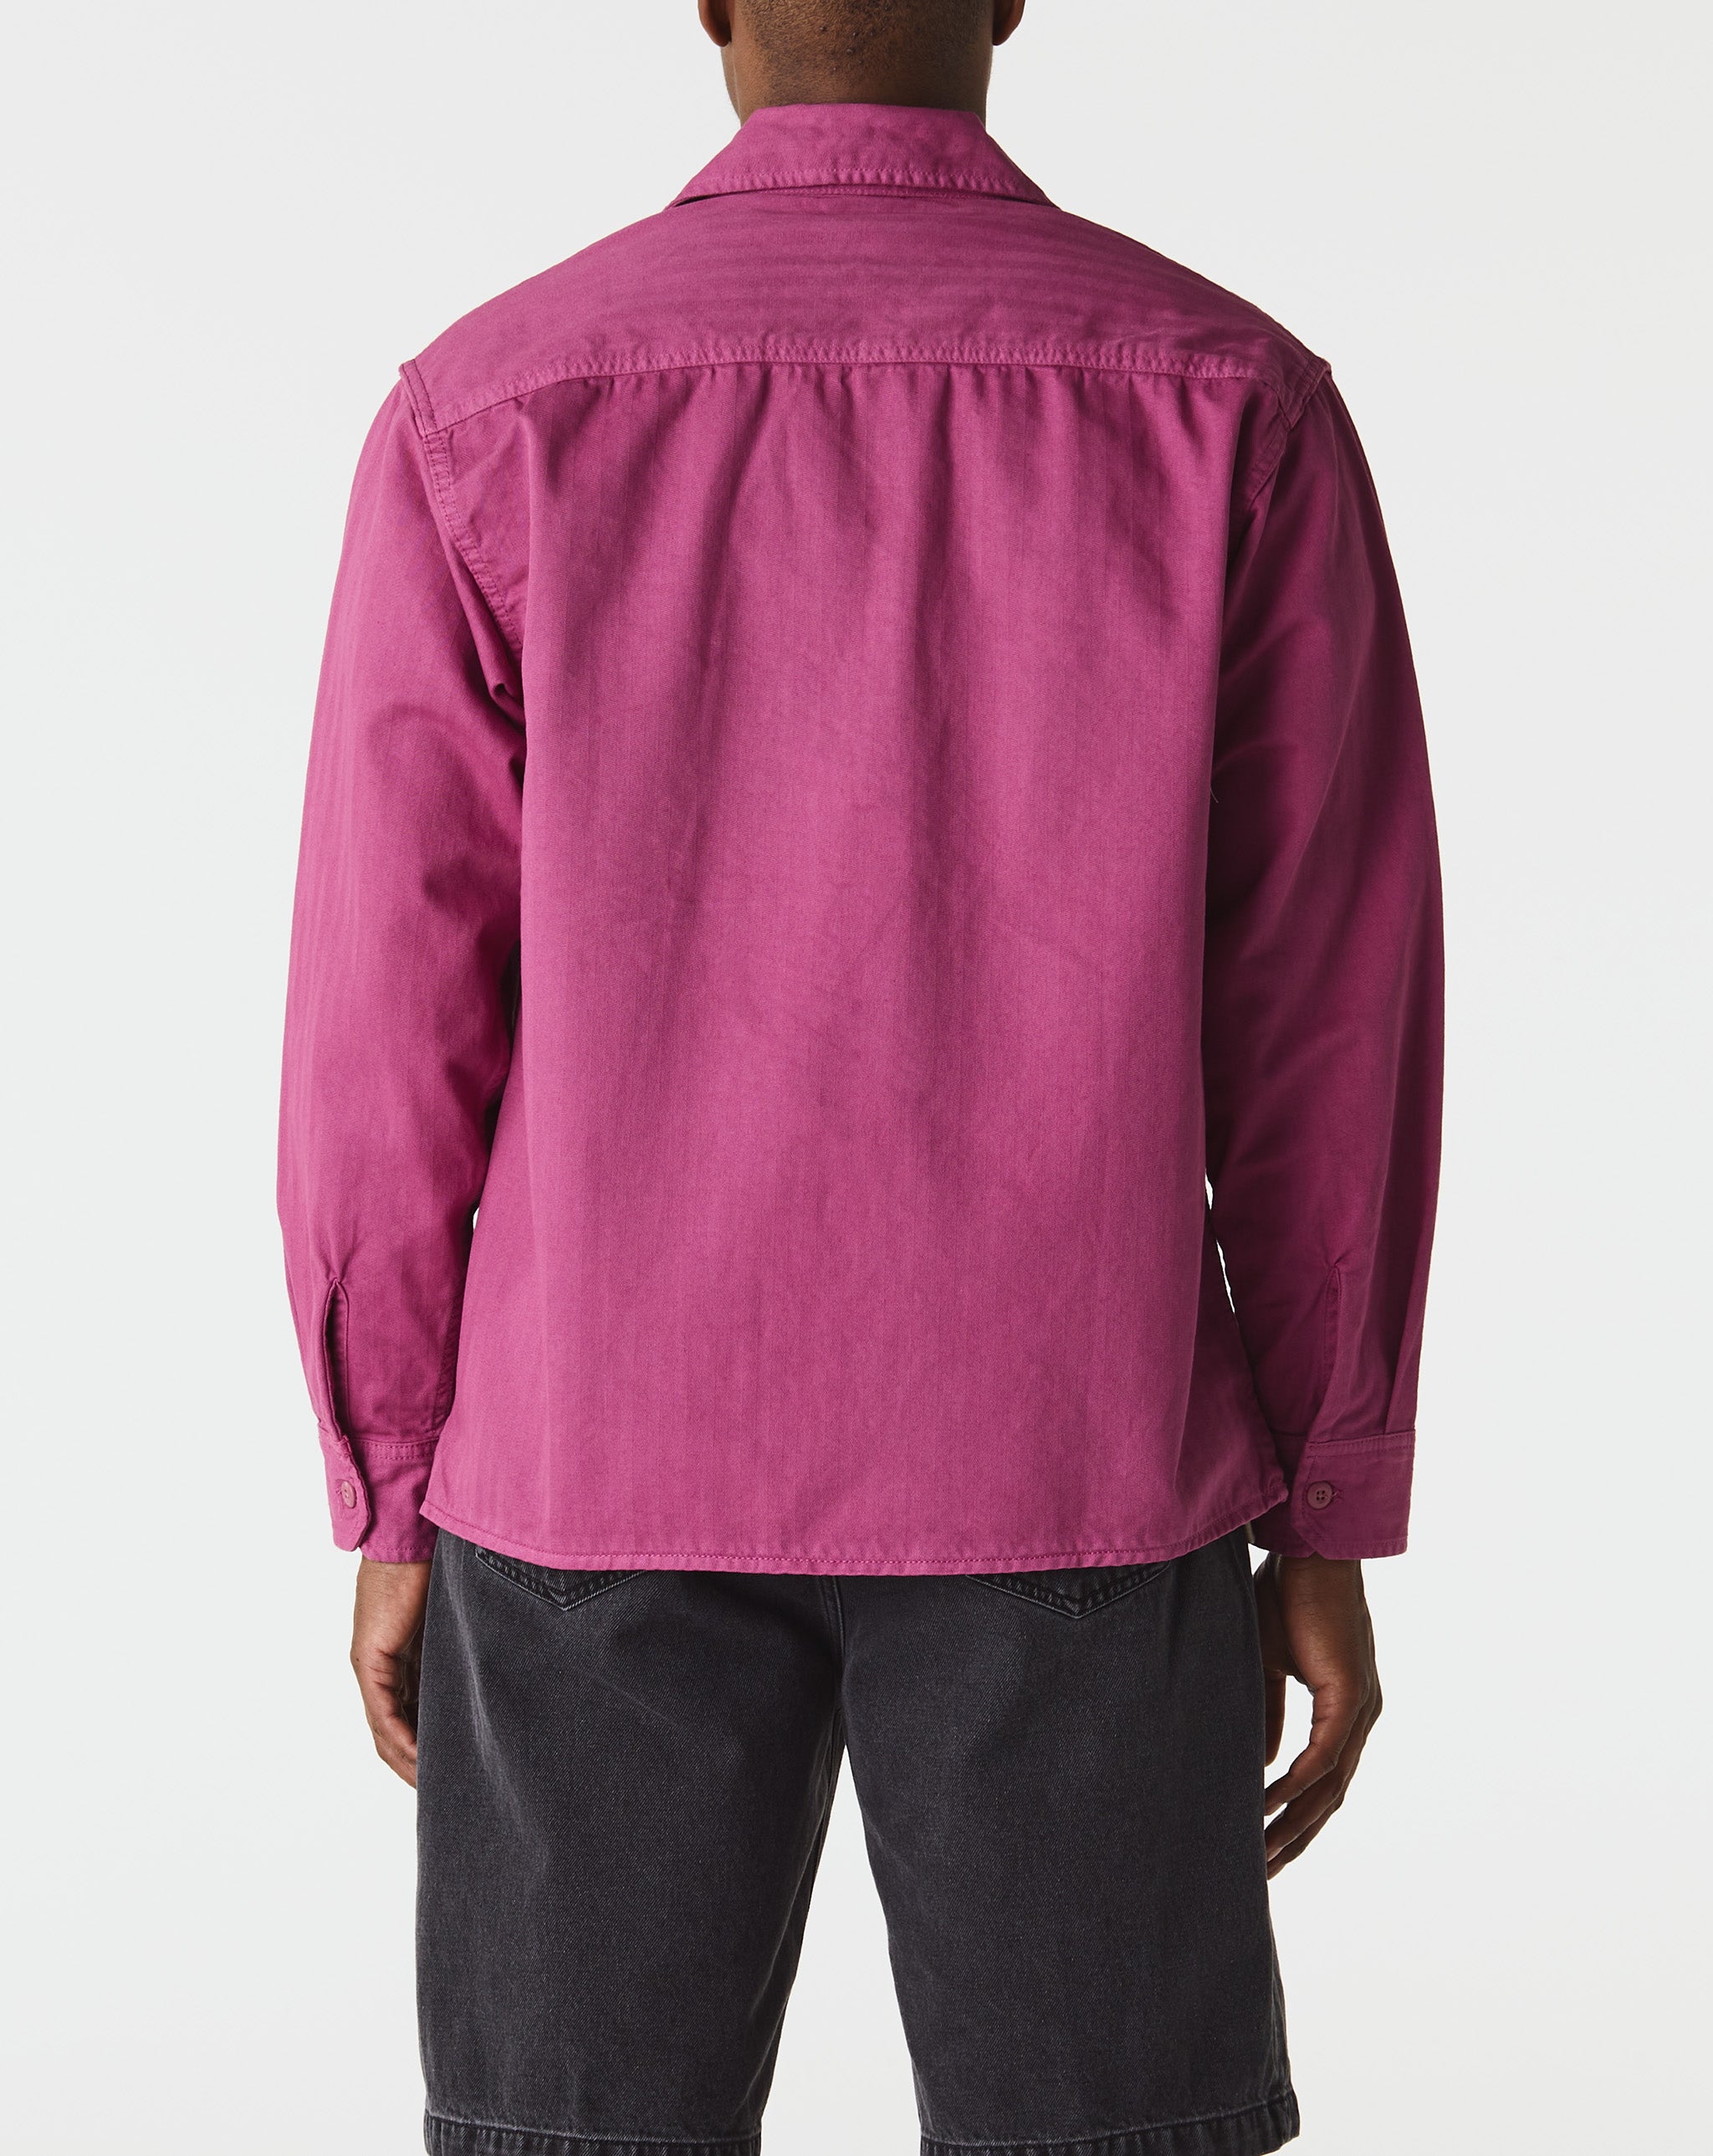 Carhartt WIP Painer Shirt Jacket  - XHIBITION